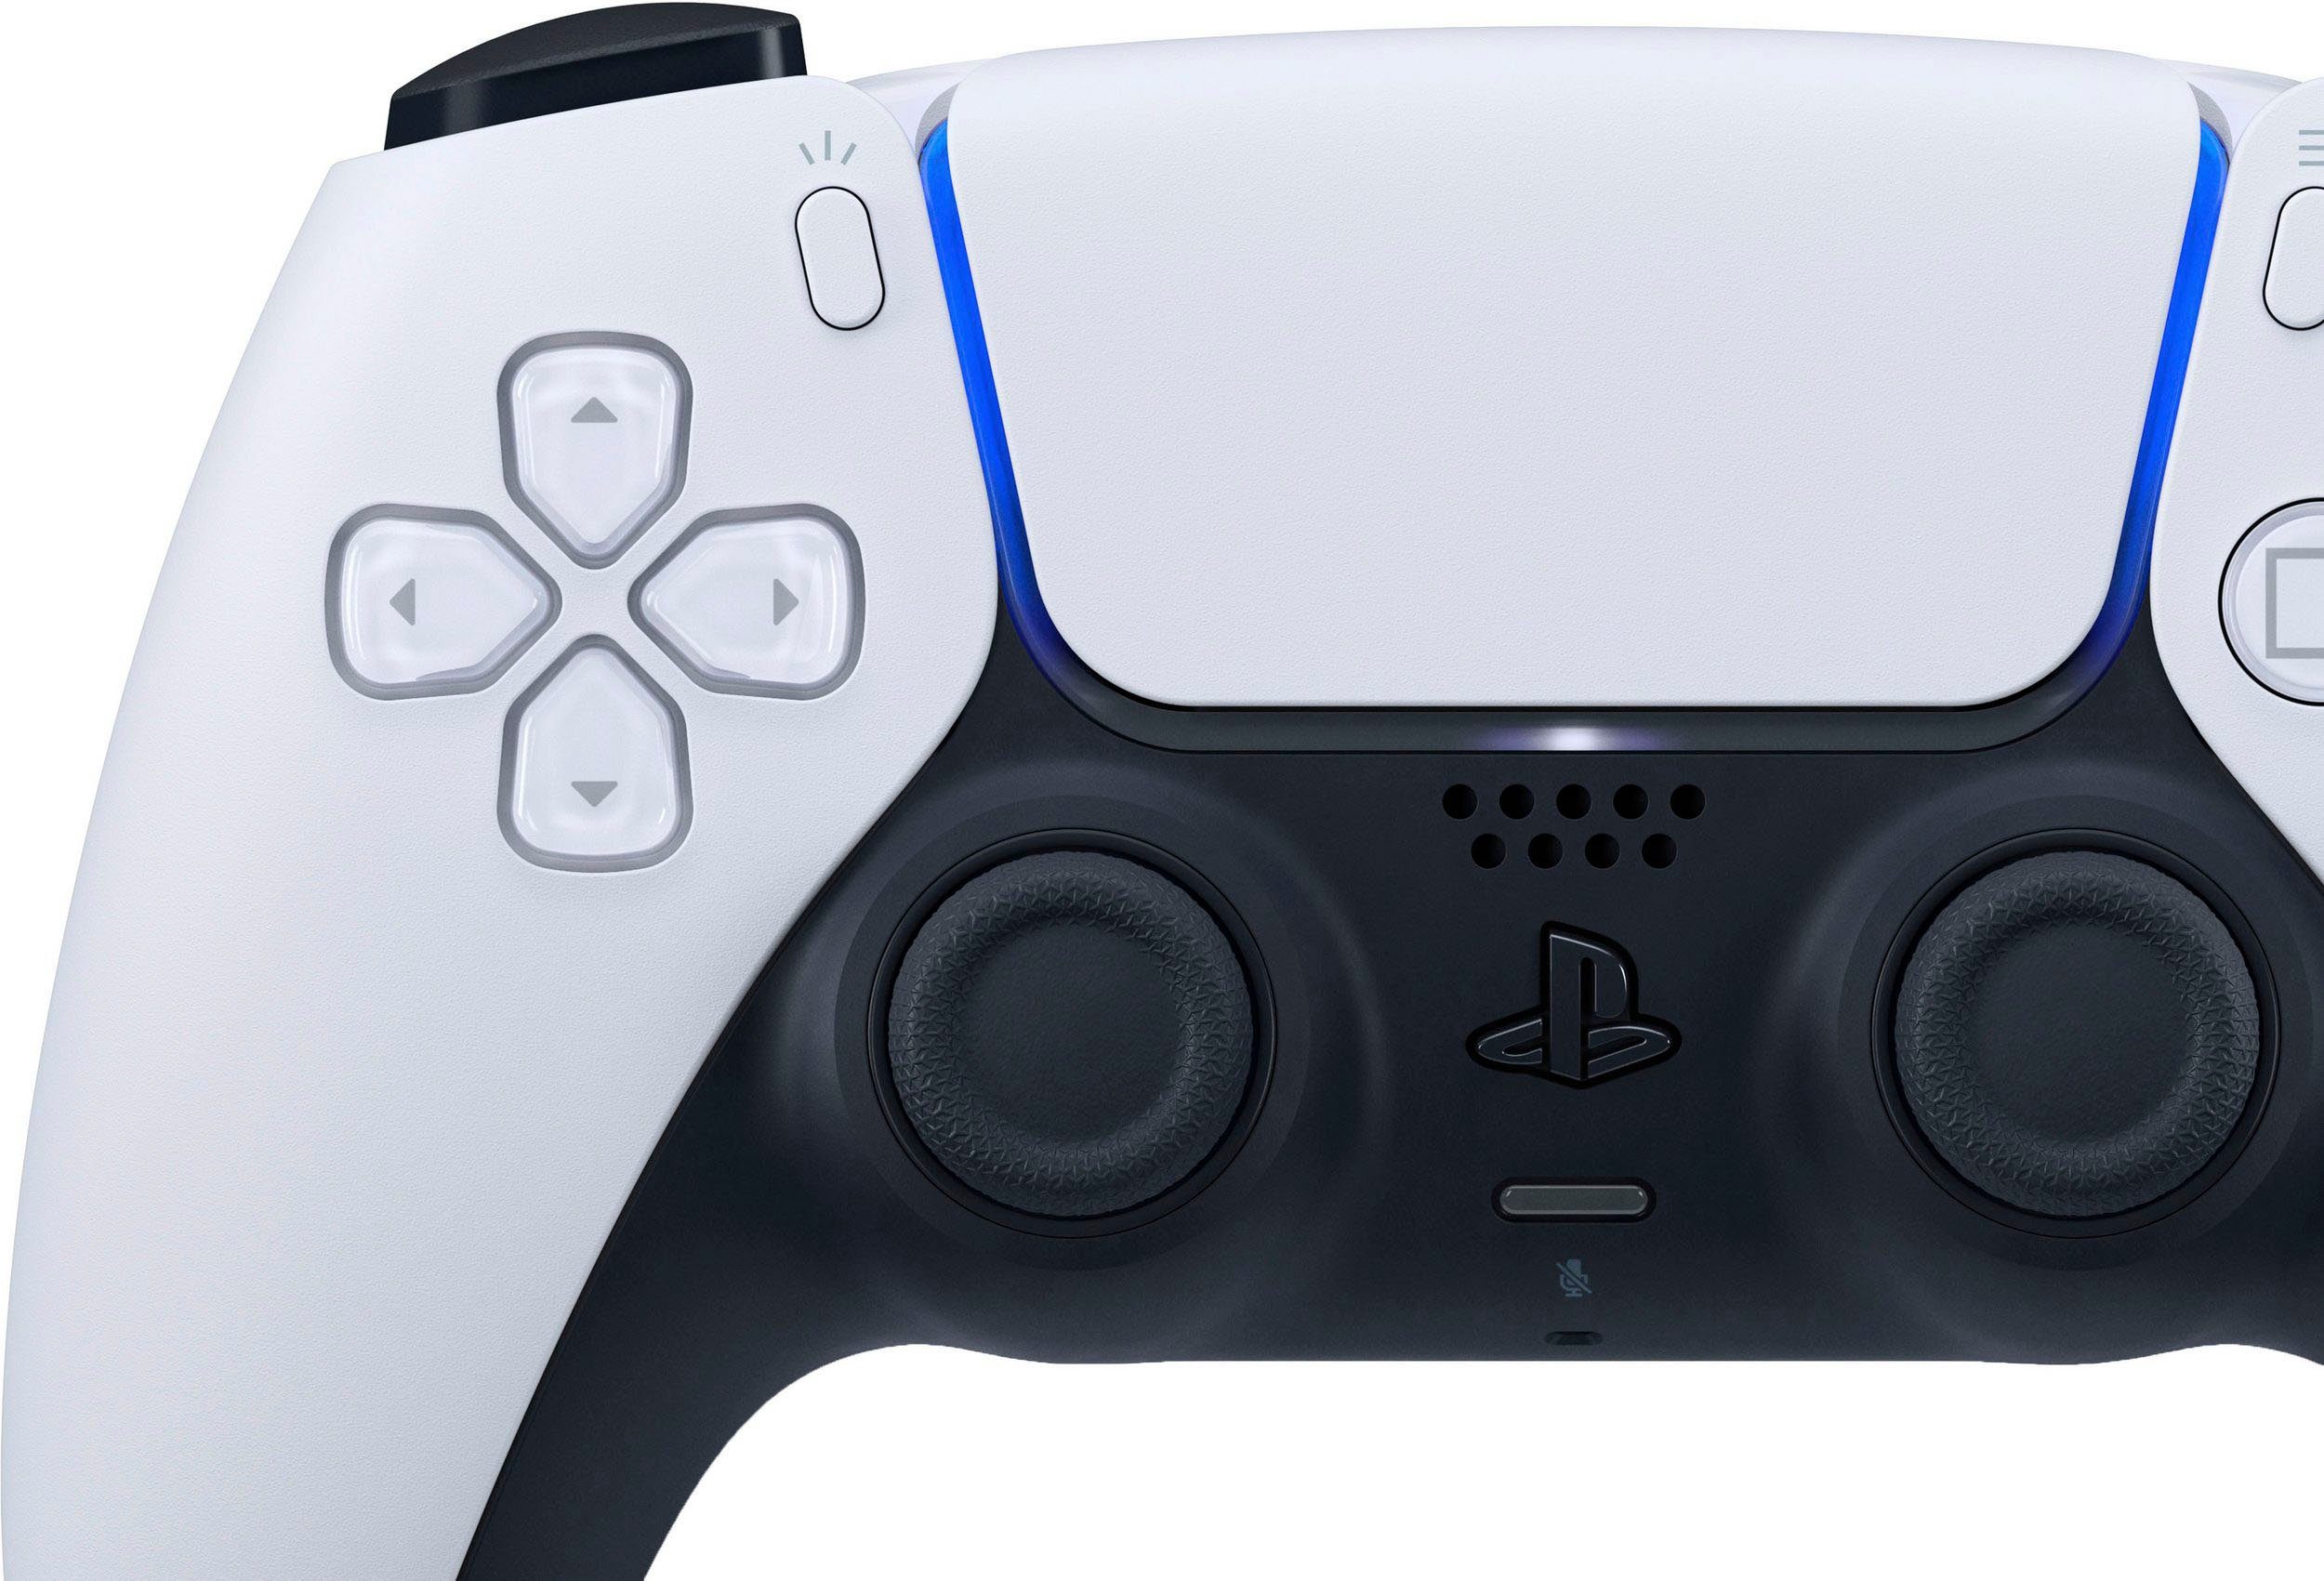 + 5 (Digitale FIFA DualSense 23 Version) PlayStation Wireless-Controller